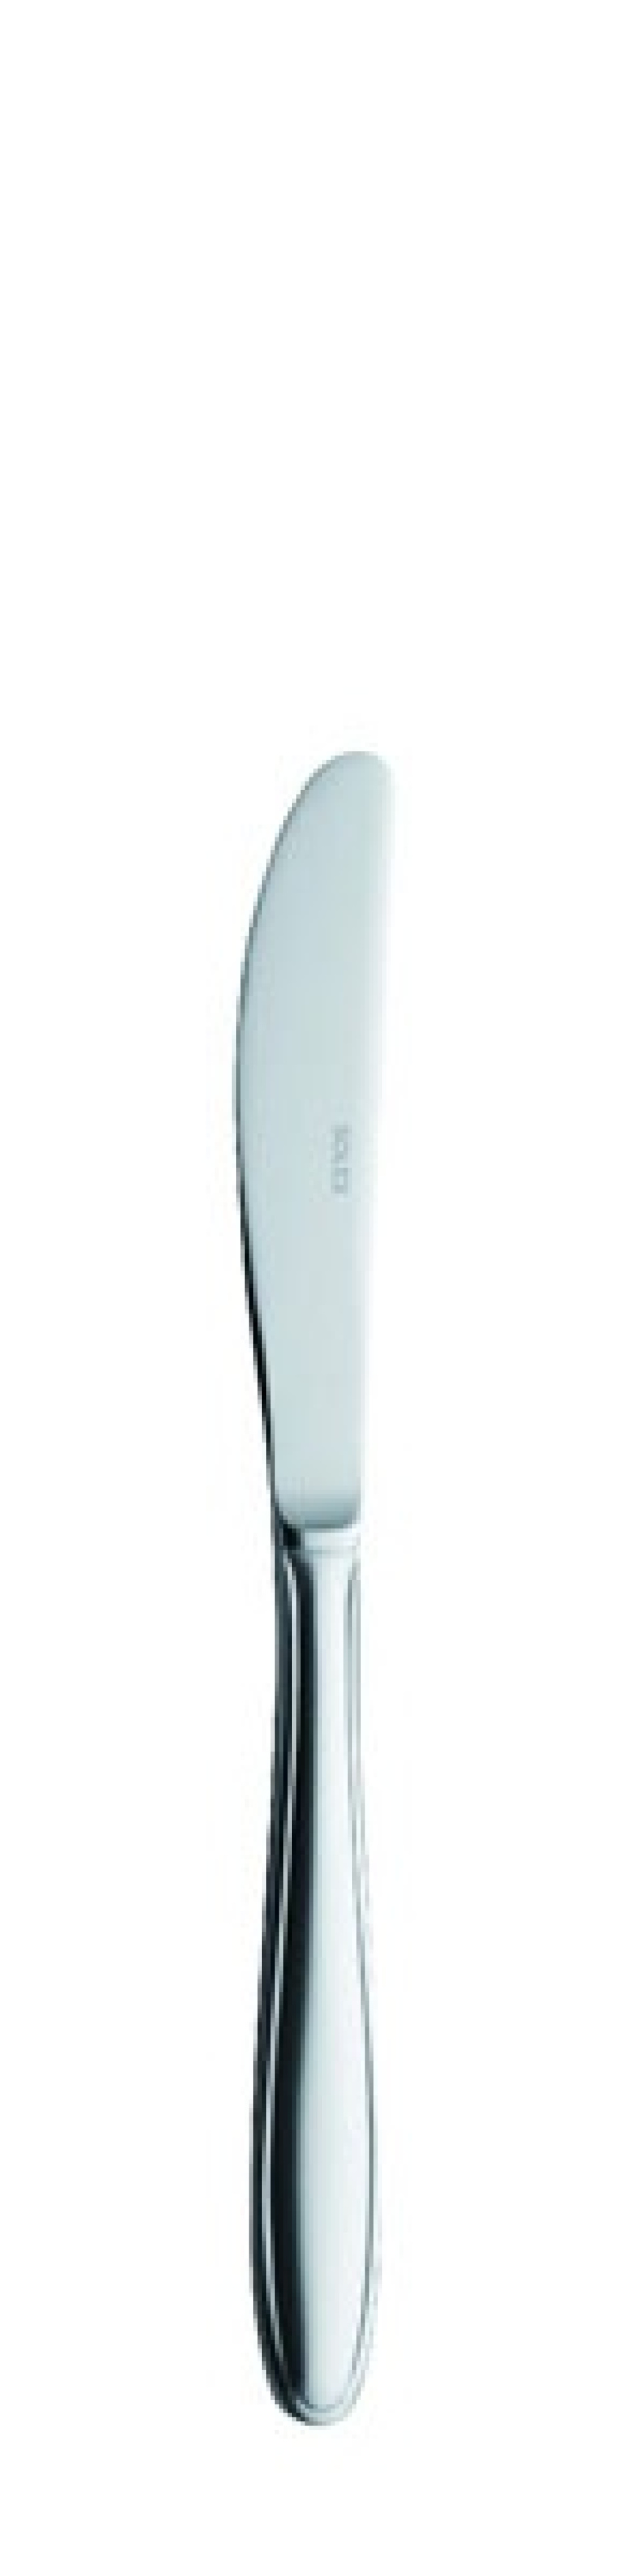 Pronto Bordskniv 210 mm - Solex i gruppen Dukning / Bestick / Knivar hos KitchenLab (1284-21398)